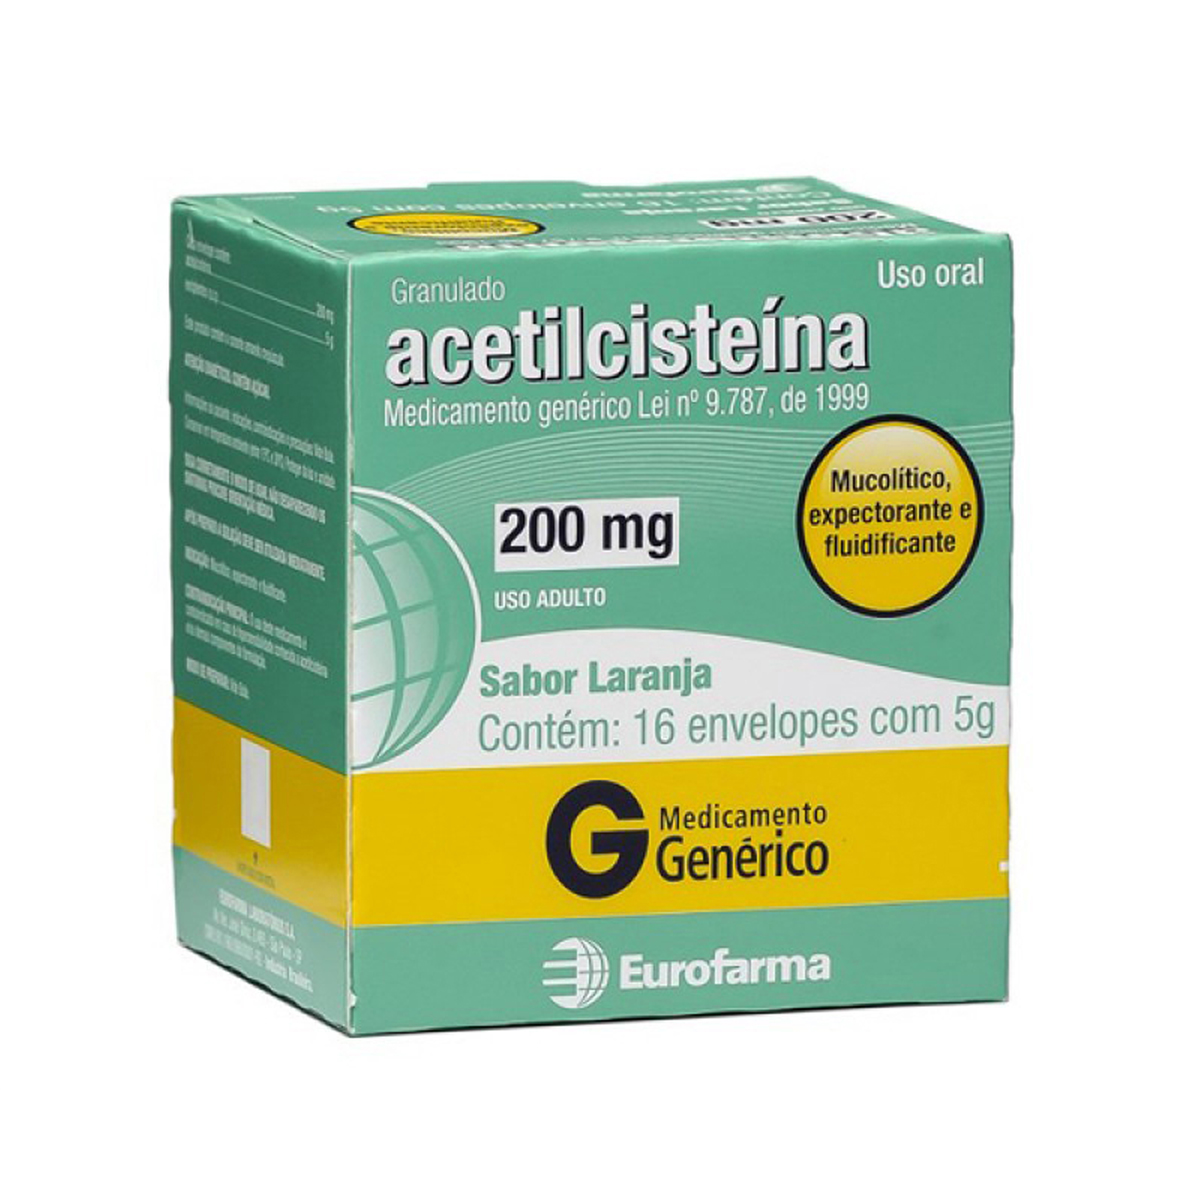 Acetilcisteína 200 mg Eurofarma 16 Envelopes